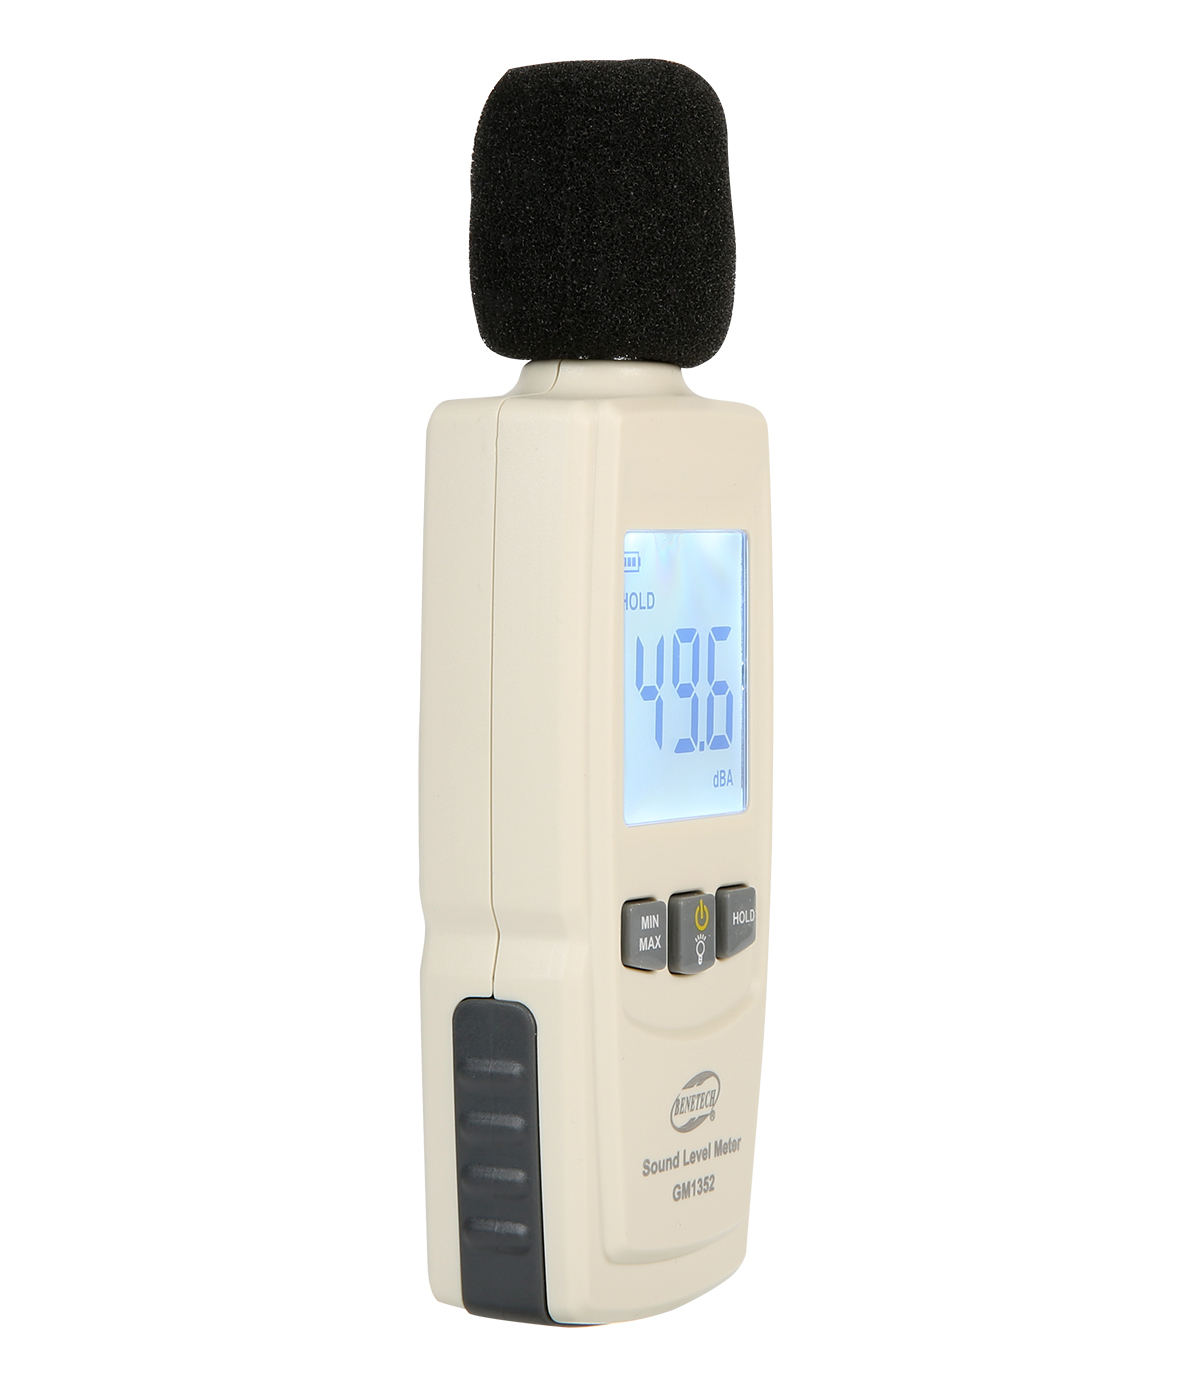 Guides barometric Pressure measurem GM1352 Sound Level Meter,Simple Readygo Temperature 